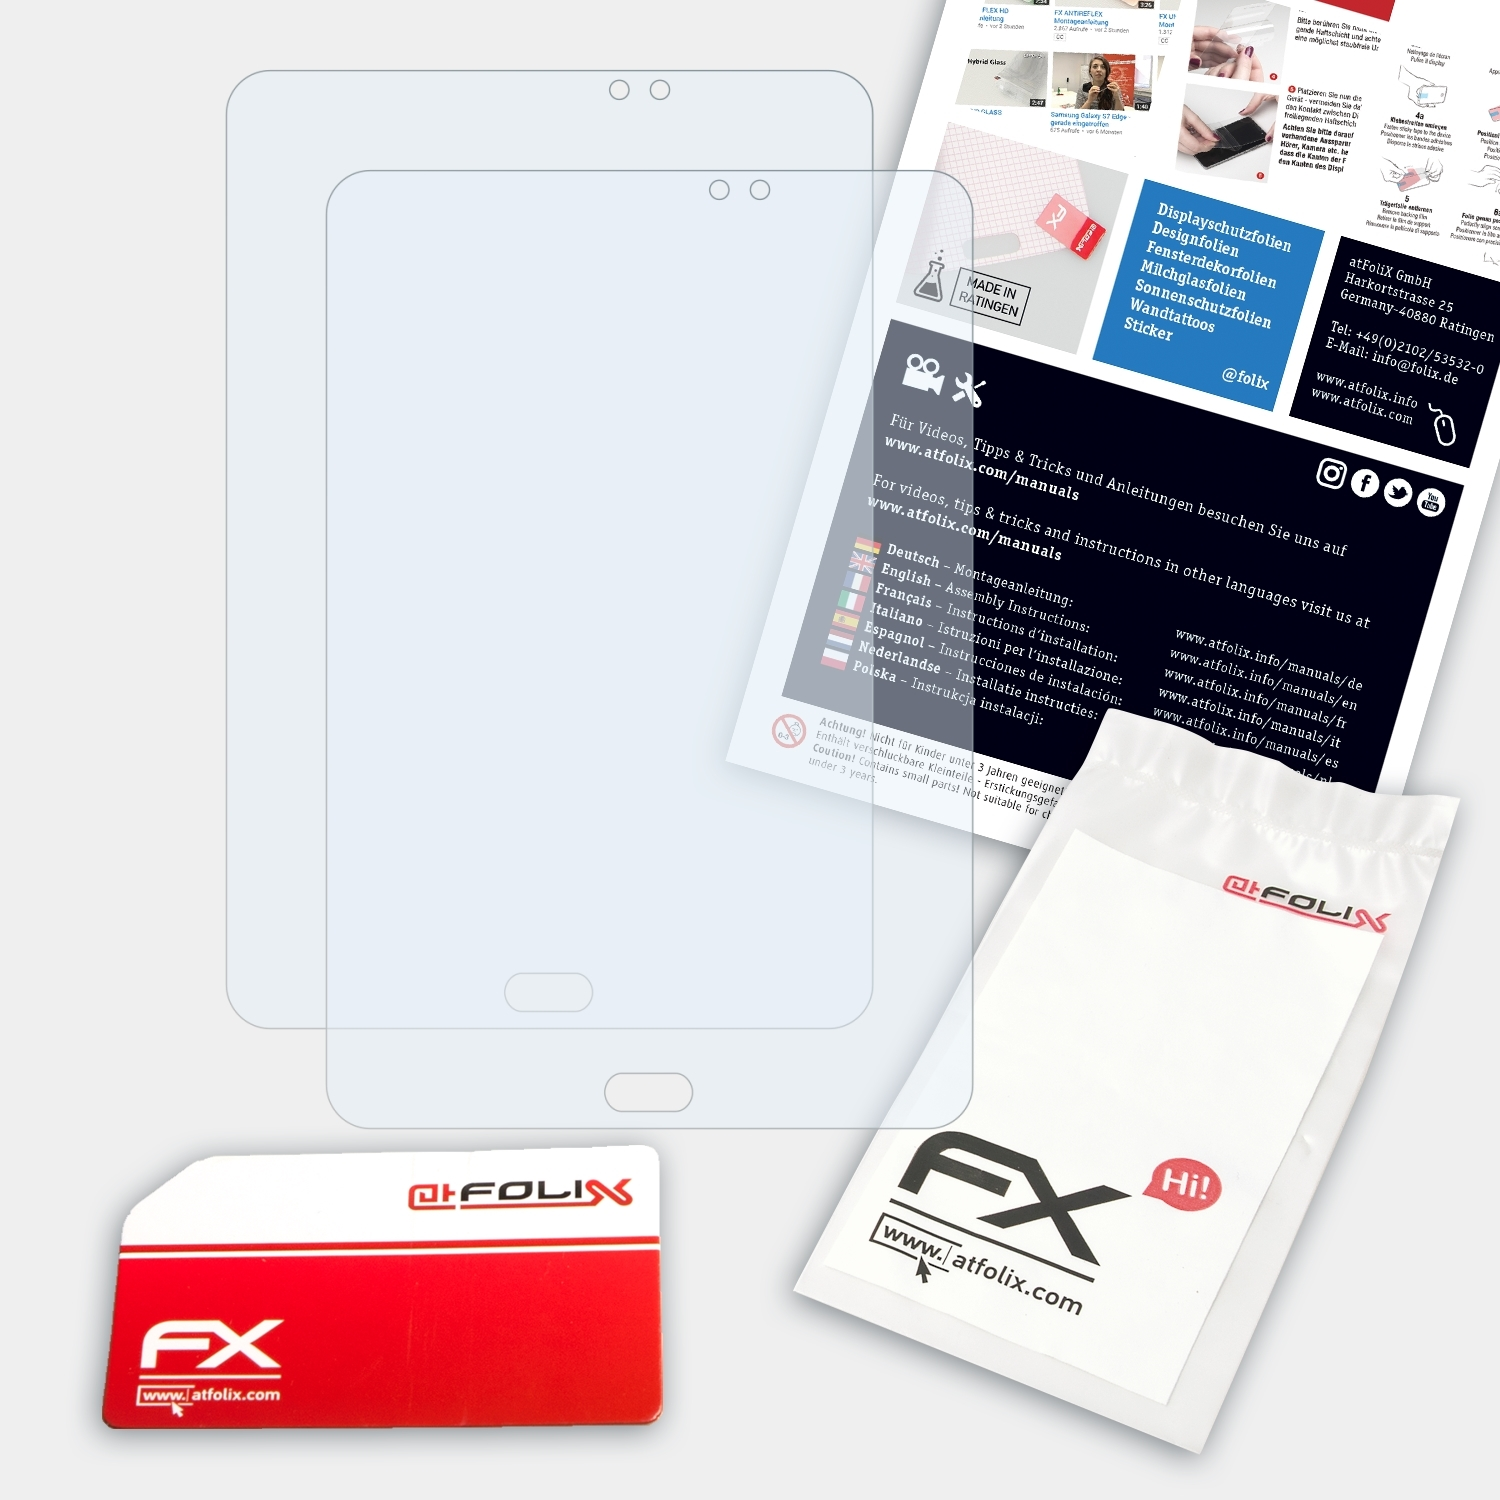 ATFOLIX 2x FX-Clear Displayschutz(für Tab Galaxy Samsung (SM-T710)) 8.0 S2